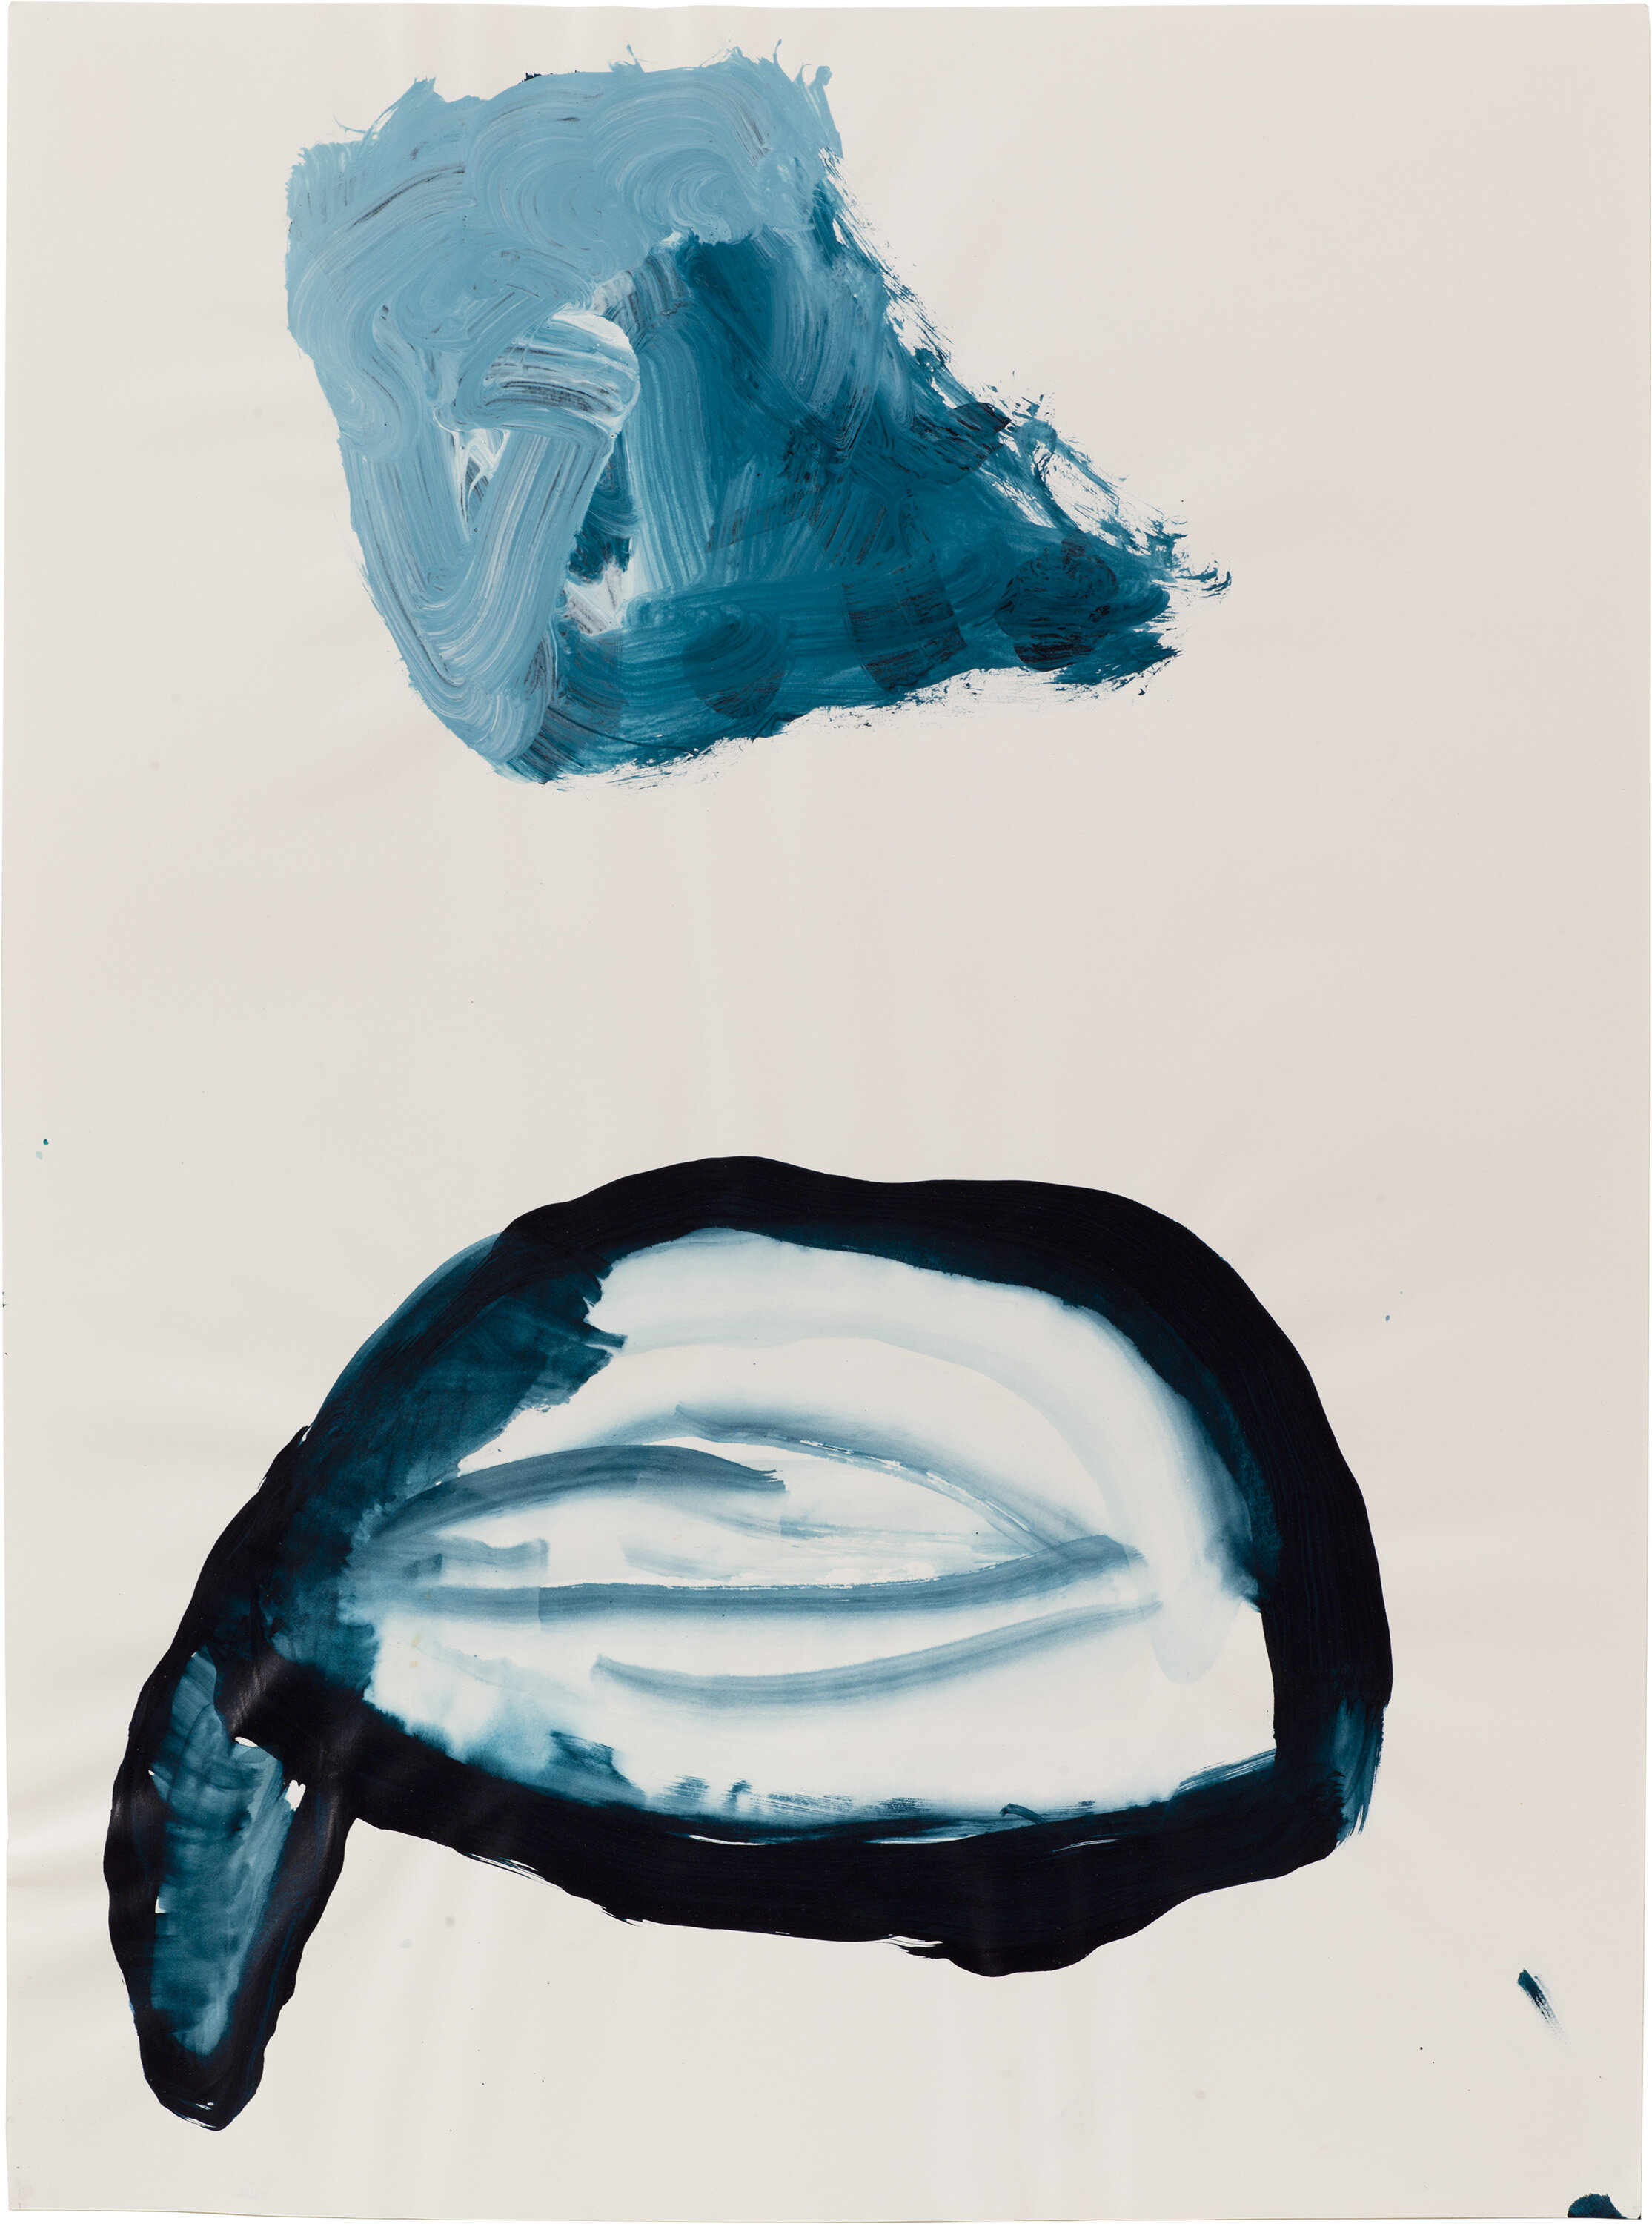  Drew Beattie and Ben Shepard   DBBS-DRW-2014-025   2014  acrylic on paper 24 x 18 inches 